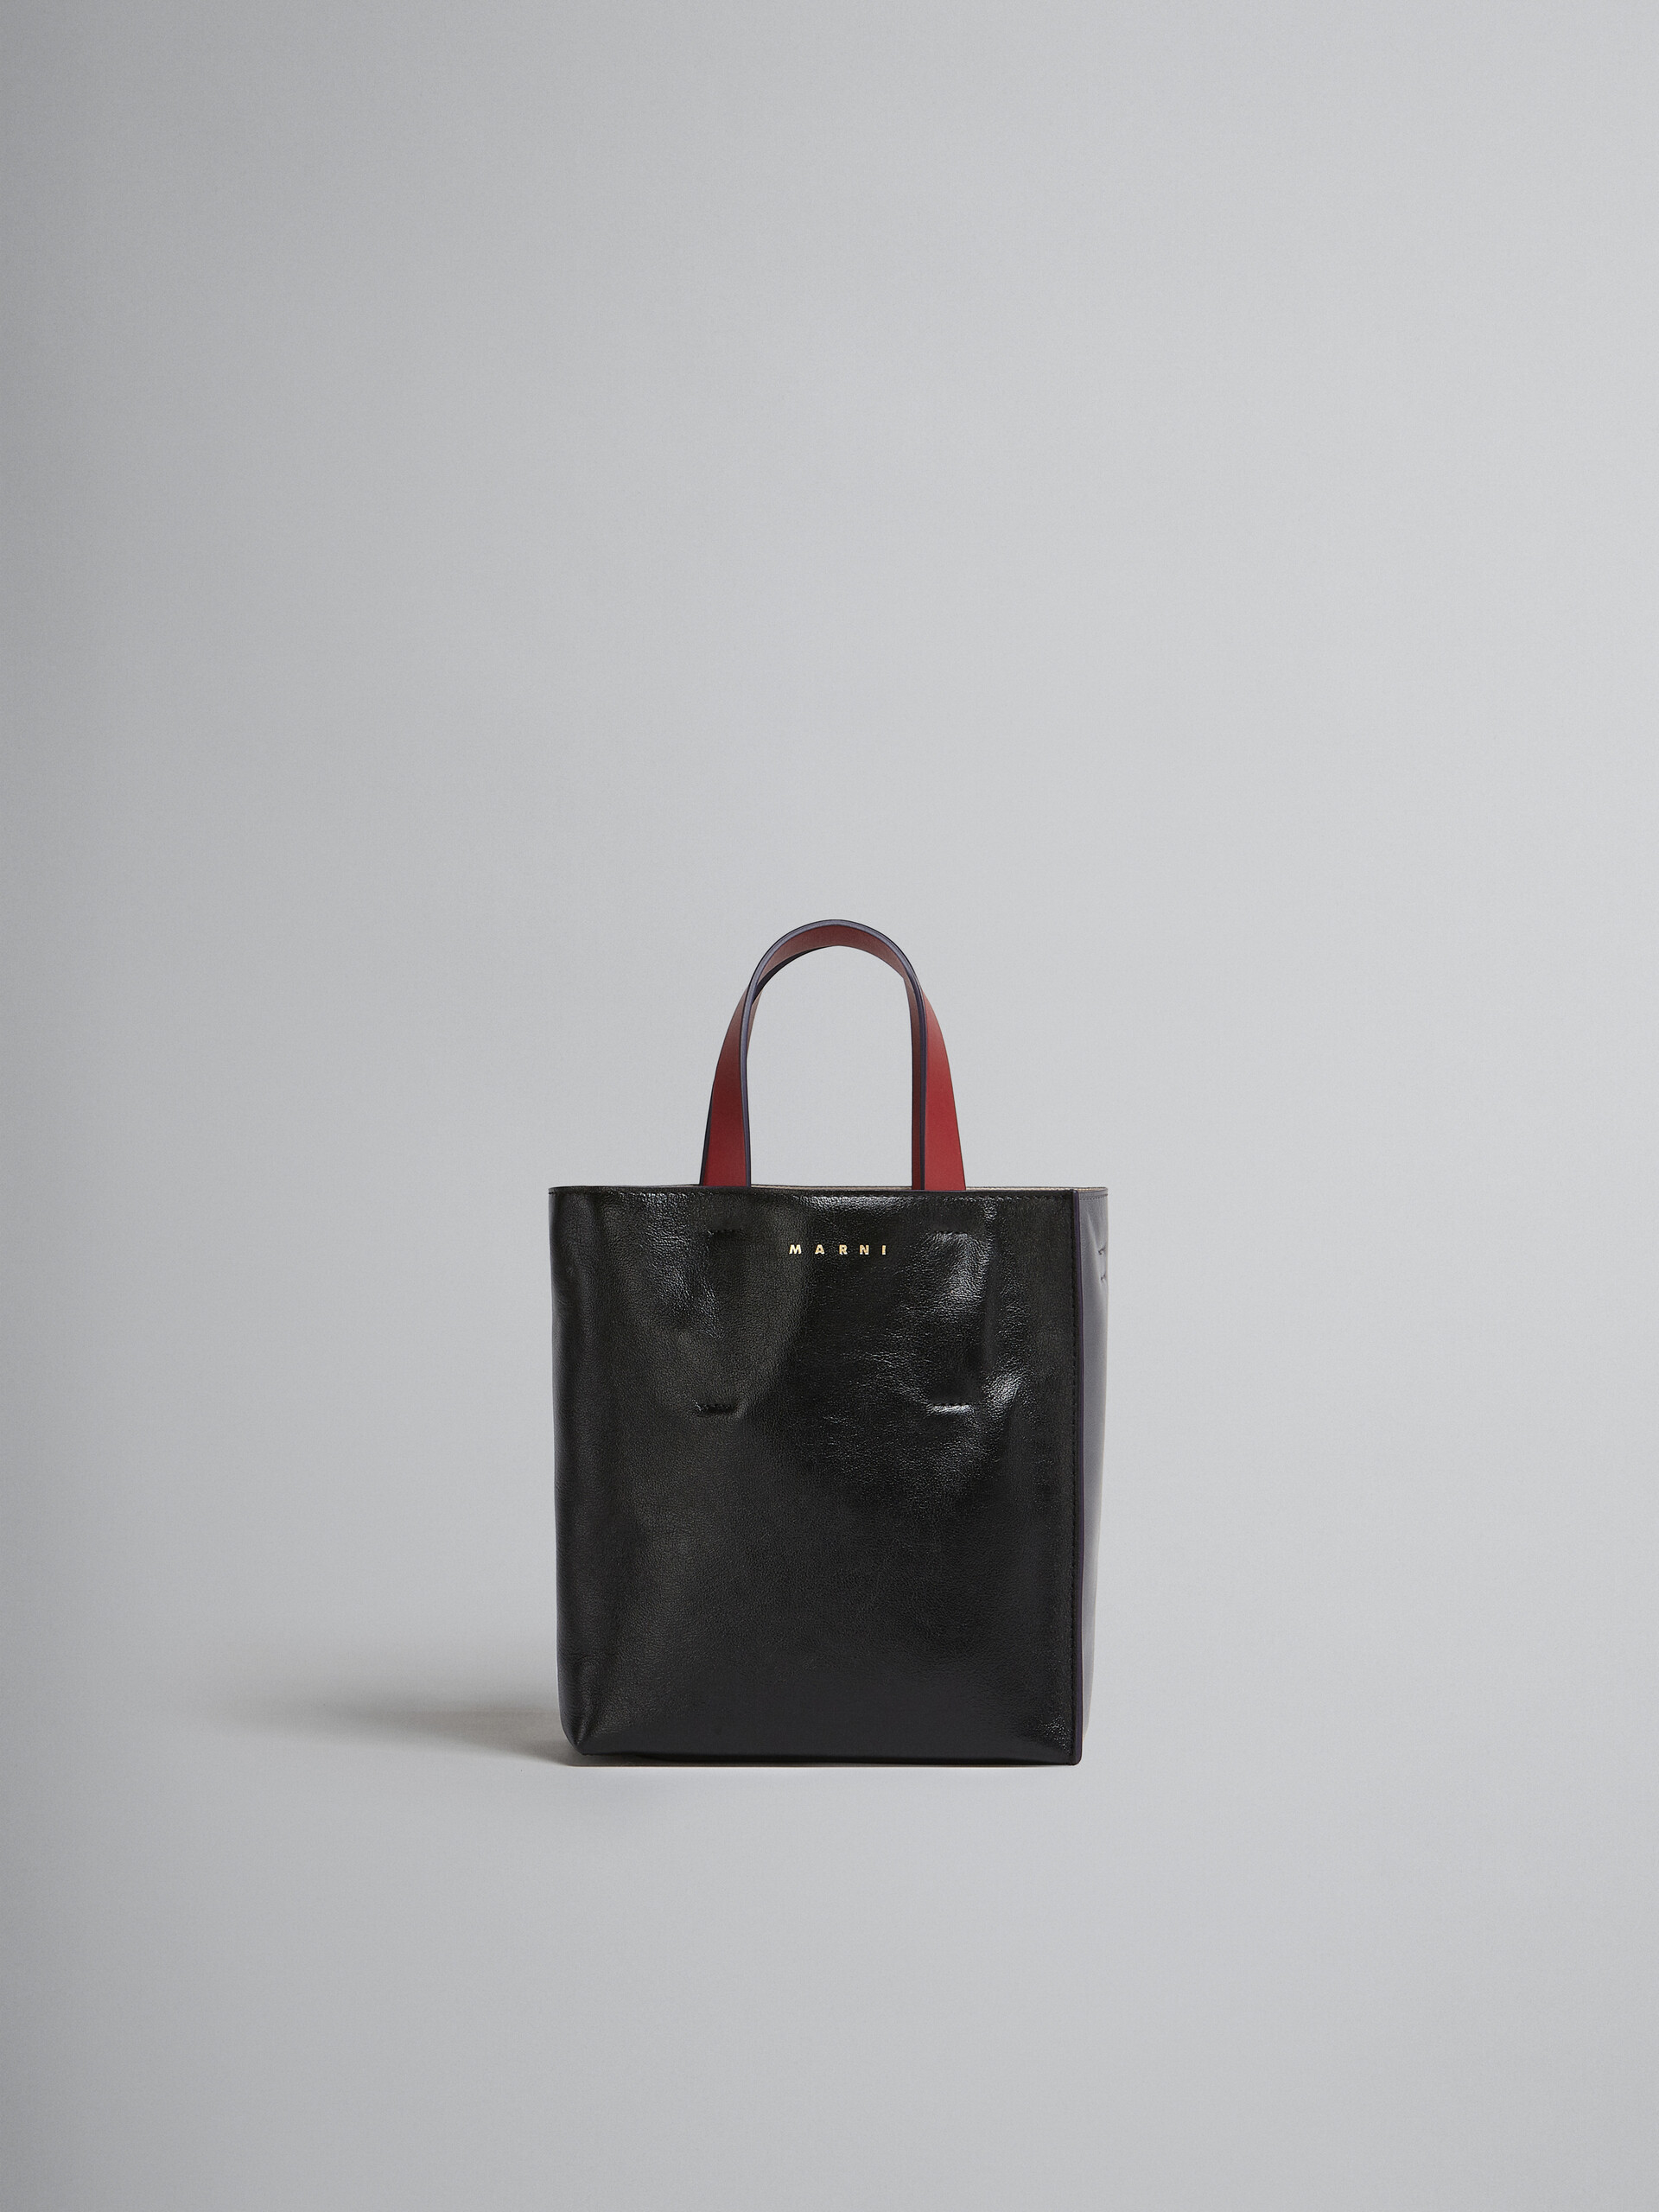 Museo Soft Bag Mini in pelle grigia nera e bordeaux - Borse shopping - Image 1